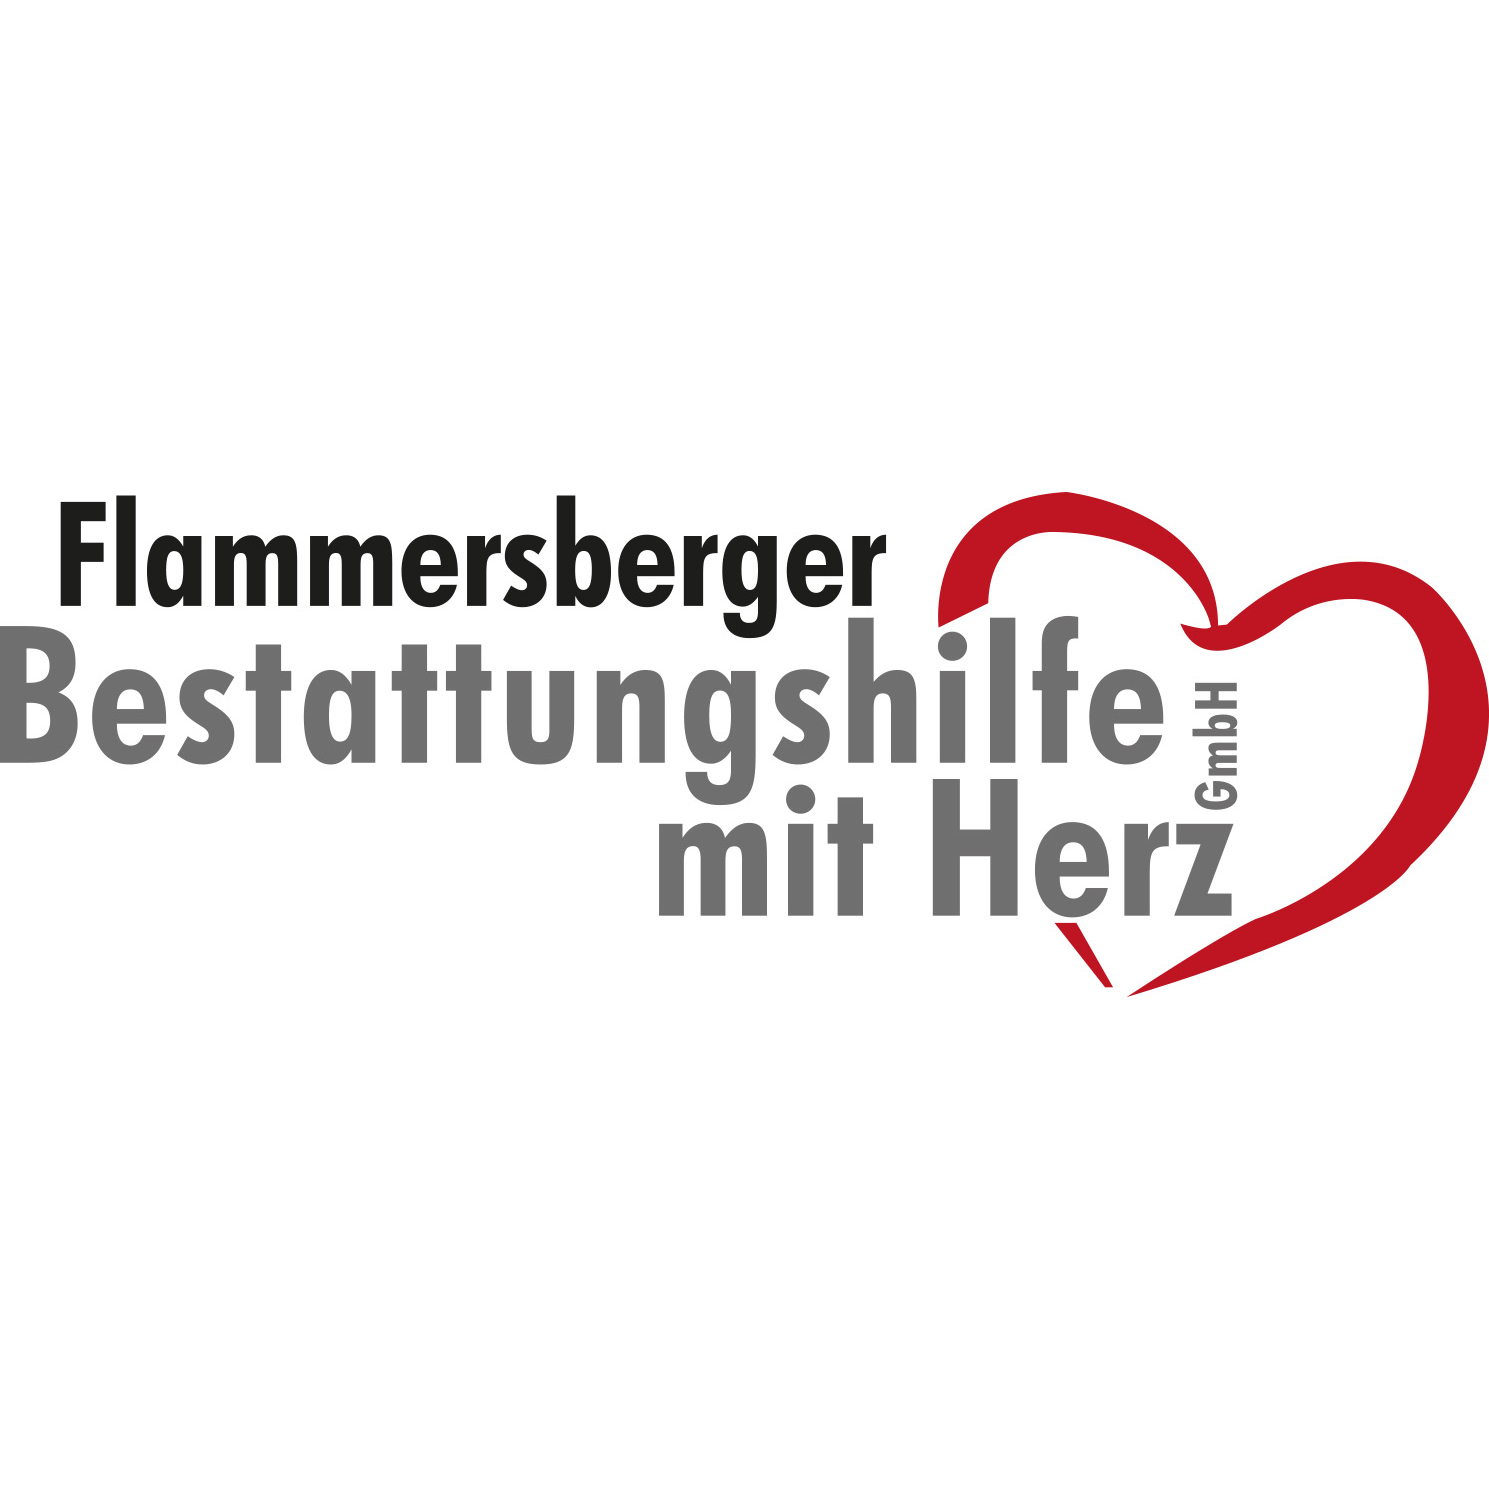 Flammersberger Bestattungshilfe in Würzburg - Logo